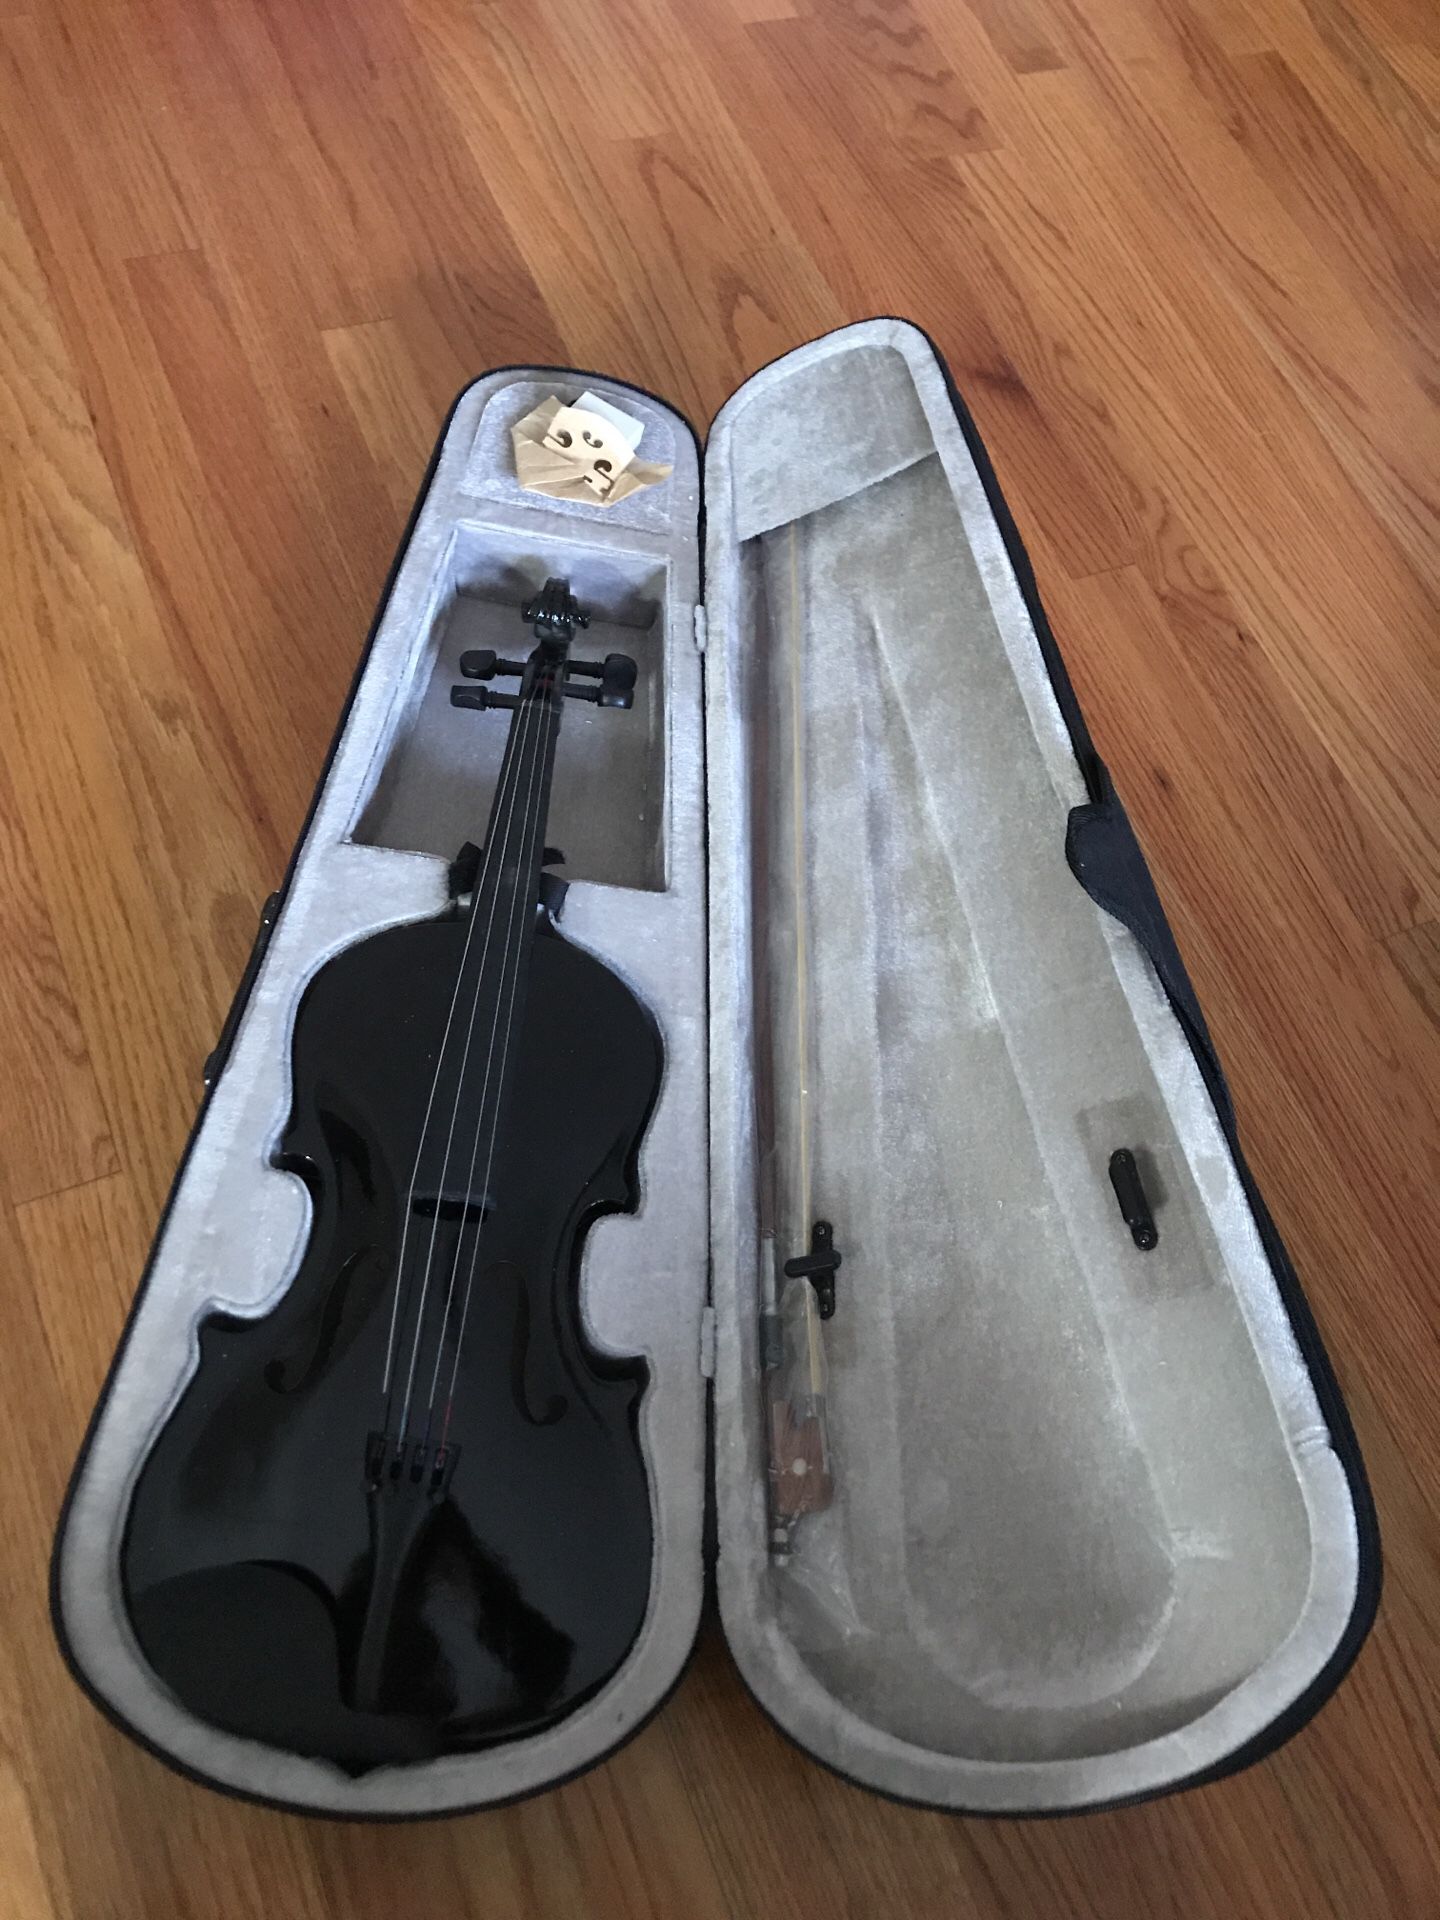 Violin & brand new